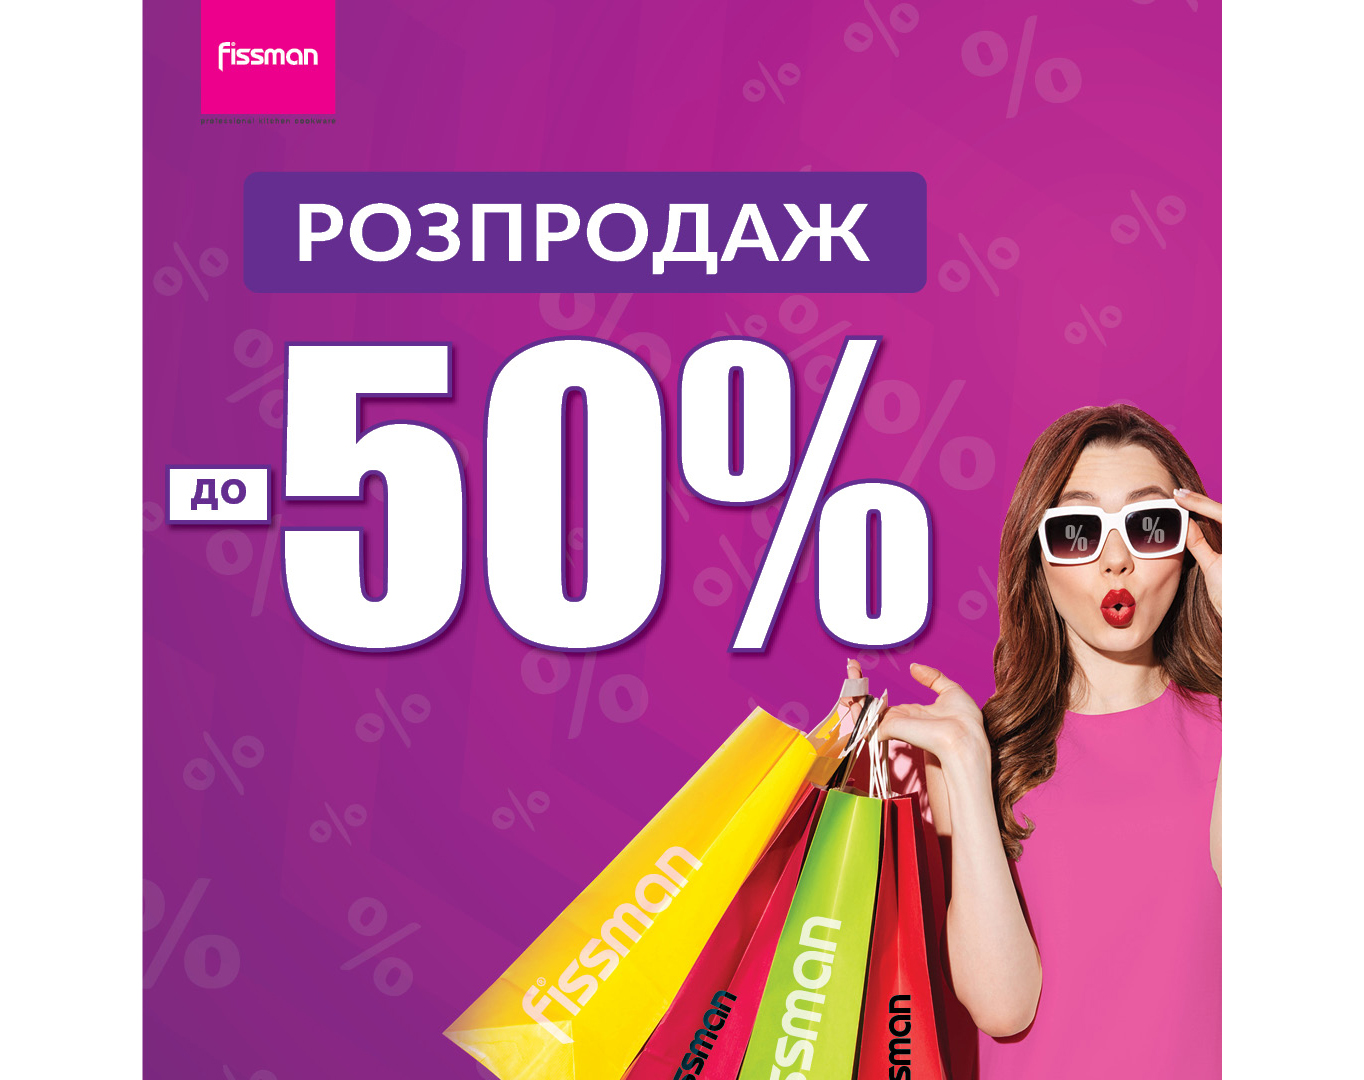 МЕГА Распродажа до -50% на посуду fissman.ua